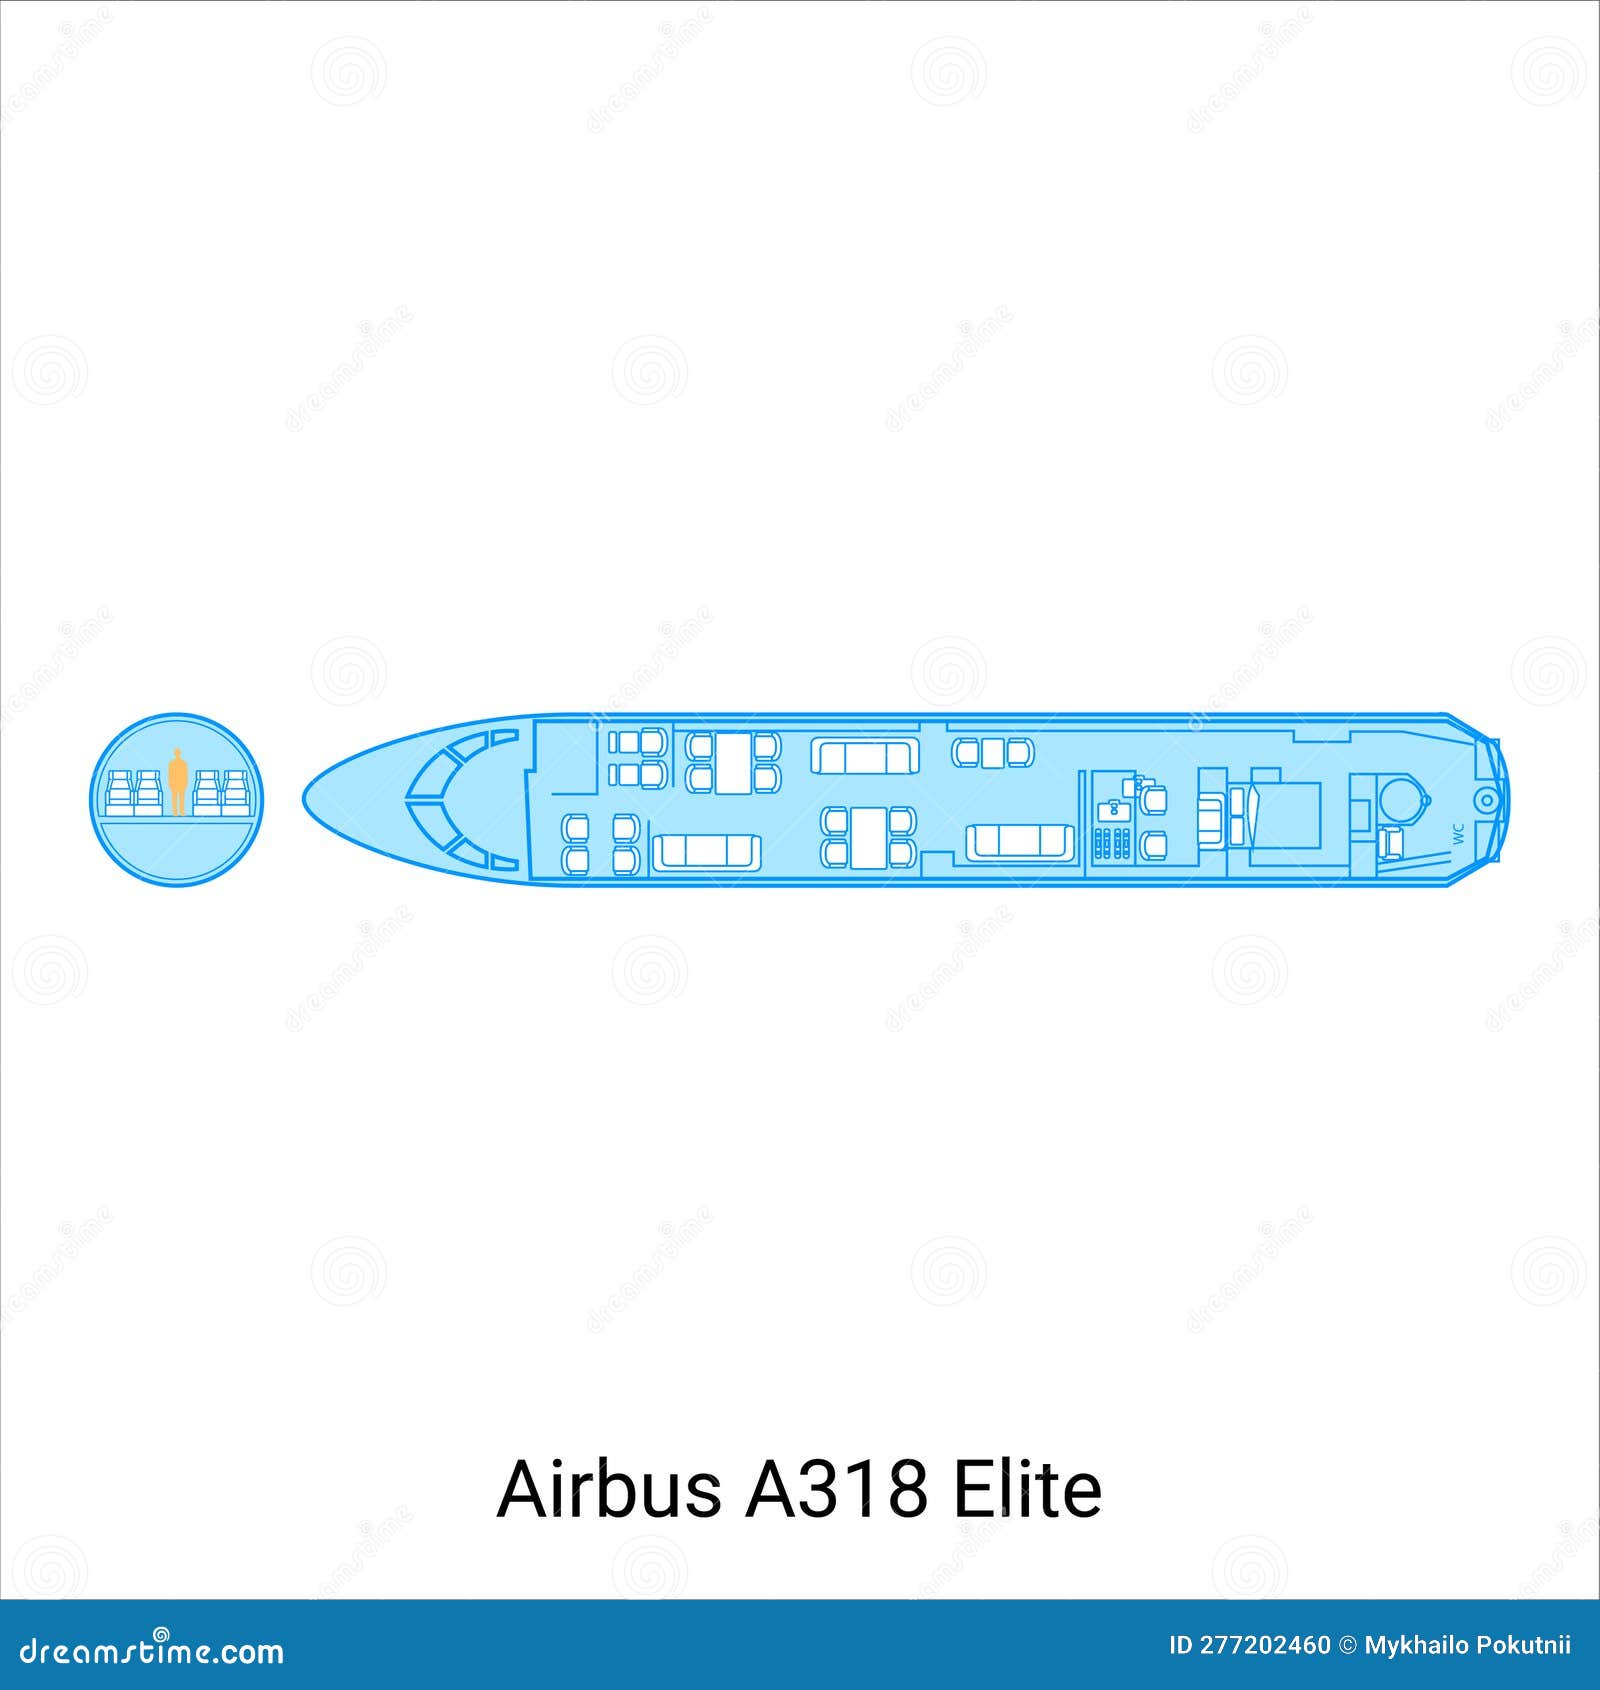 Airbus A318 Elite Airplane Scheme. Civil Aircraft Guide Stock ...